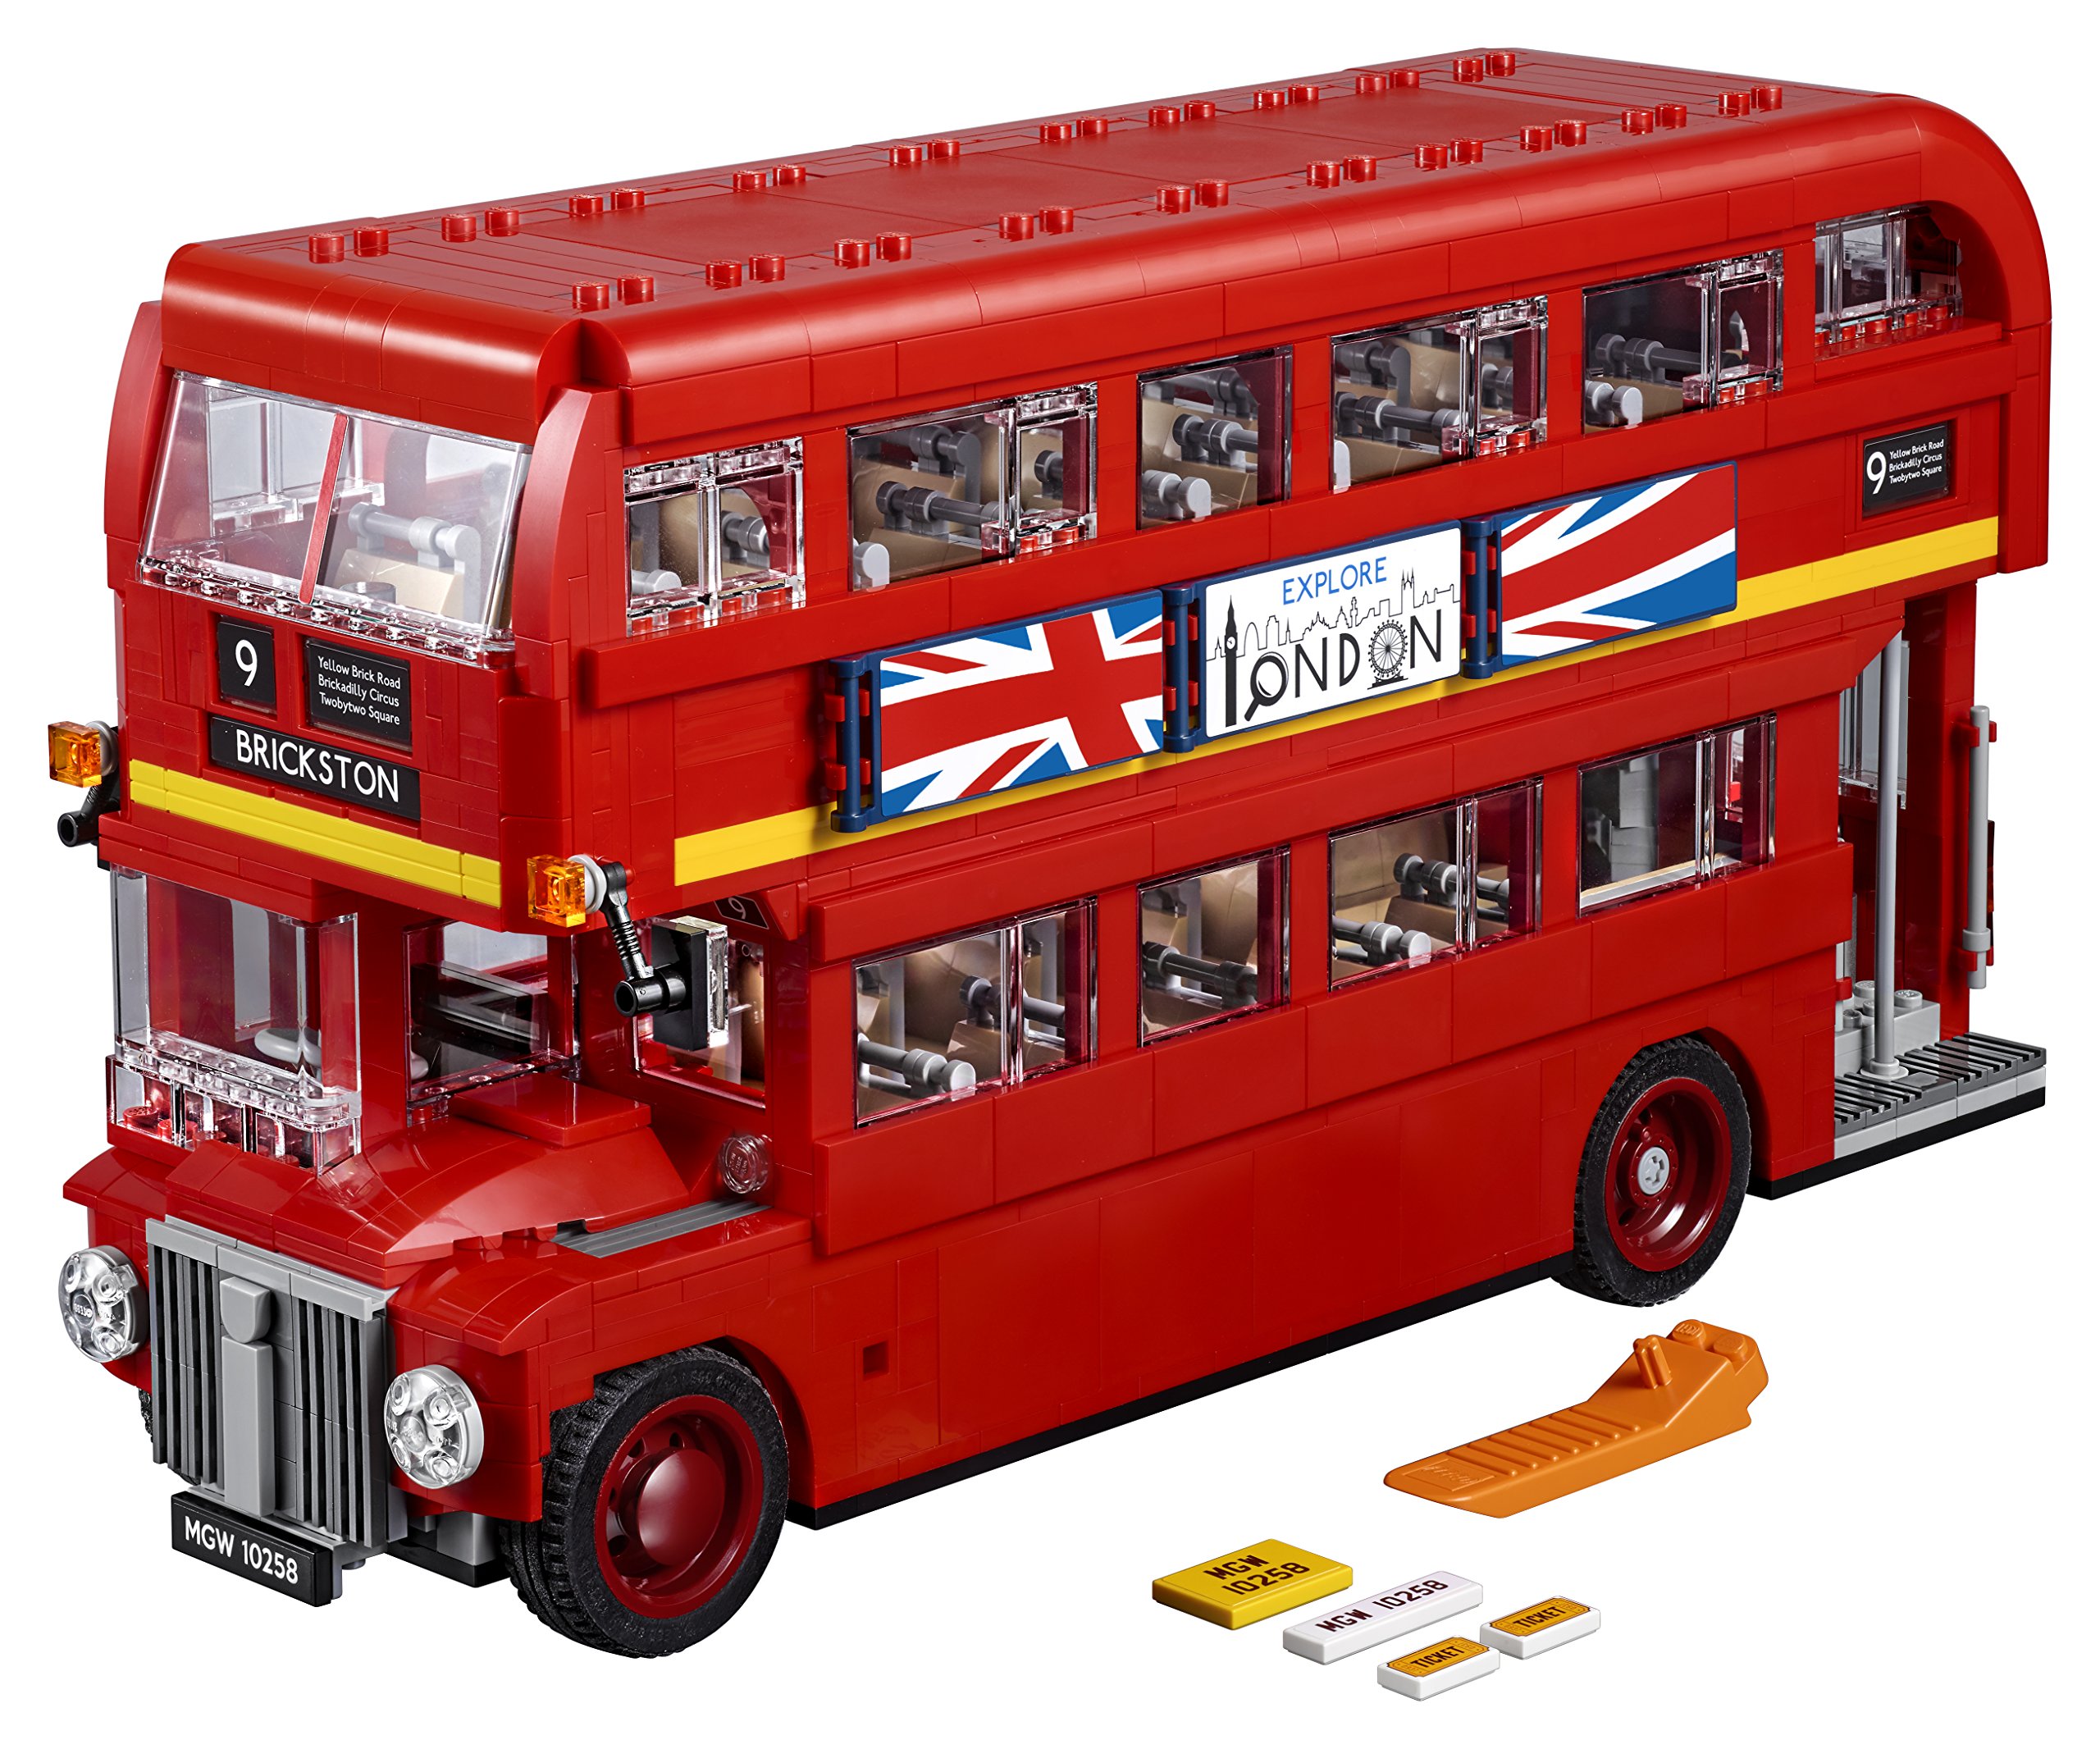 LEGO Creator Expert London Bus 10258 Building Kit (1686 Pieces)